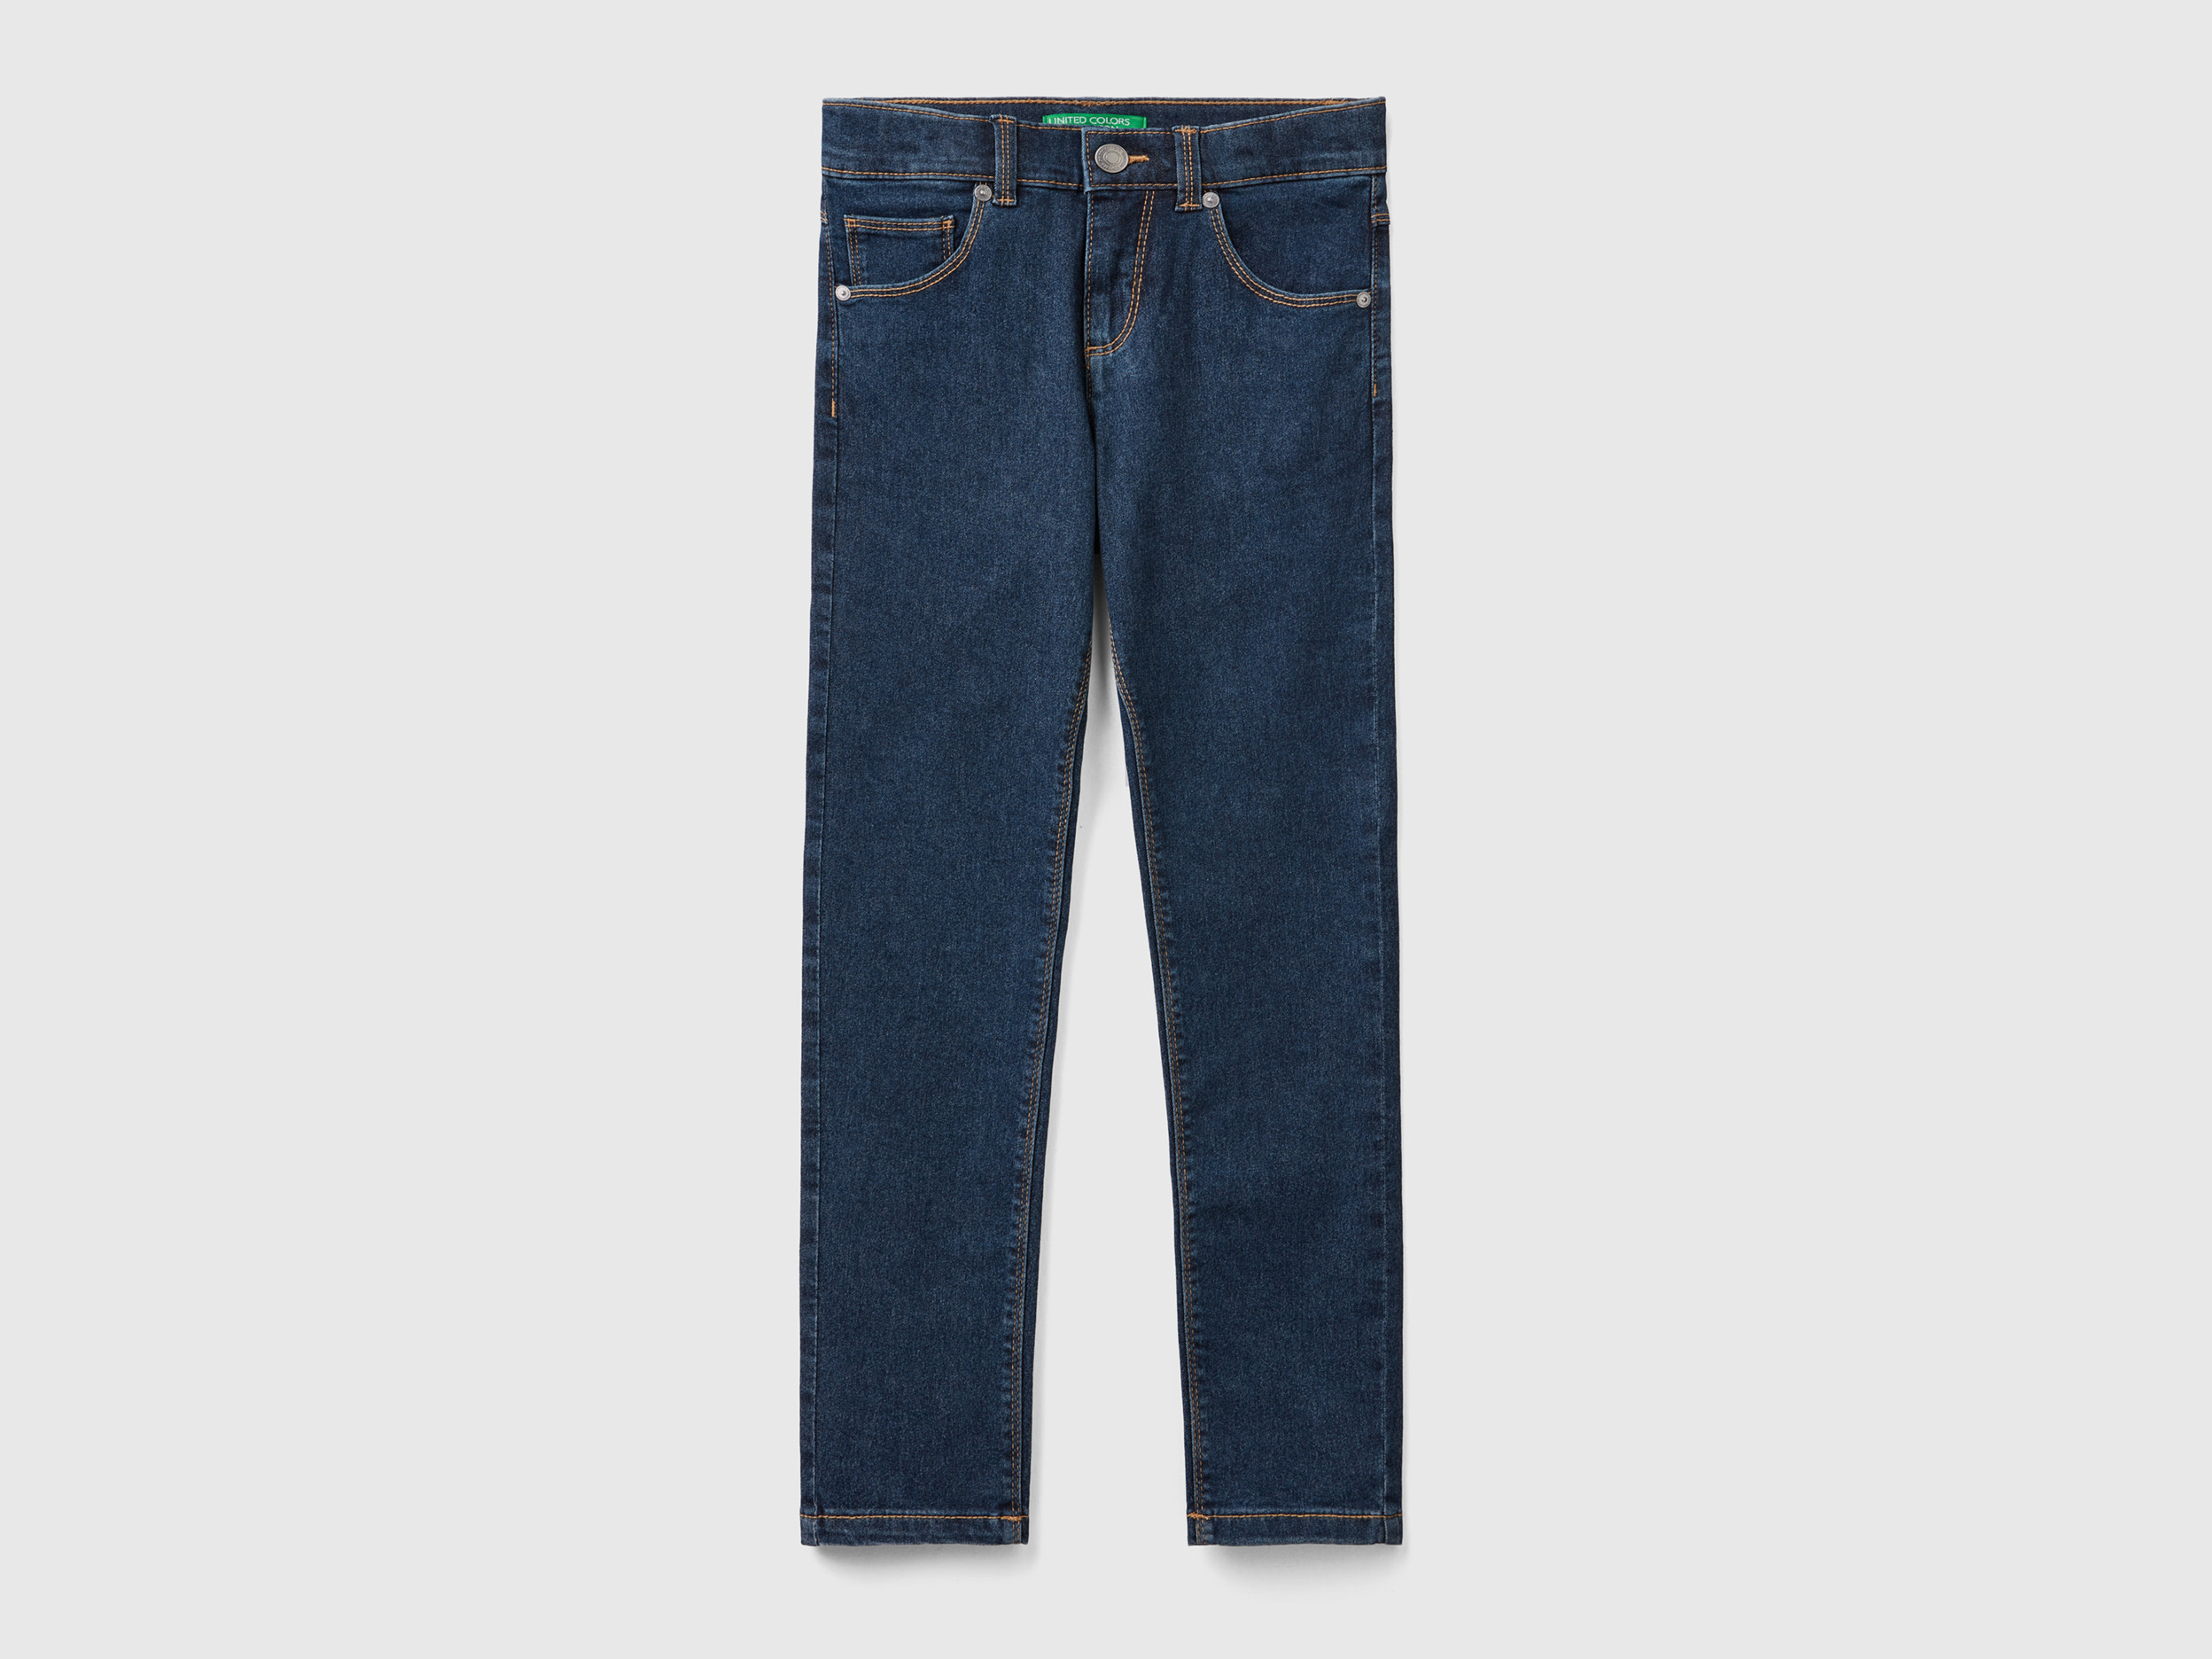 Benetton, Five-pocket Slim Fit Jeans, size 3XL, Dark Blue, Kids